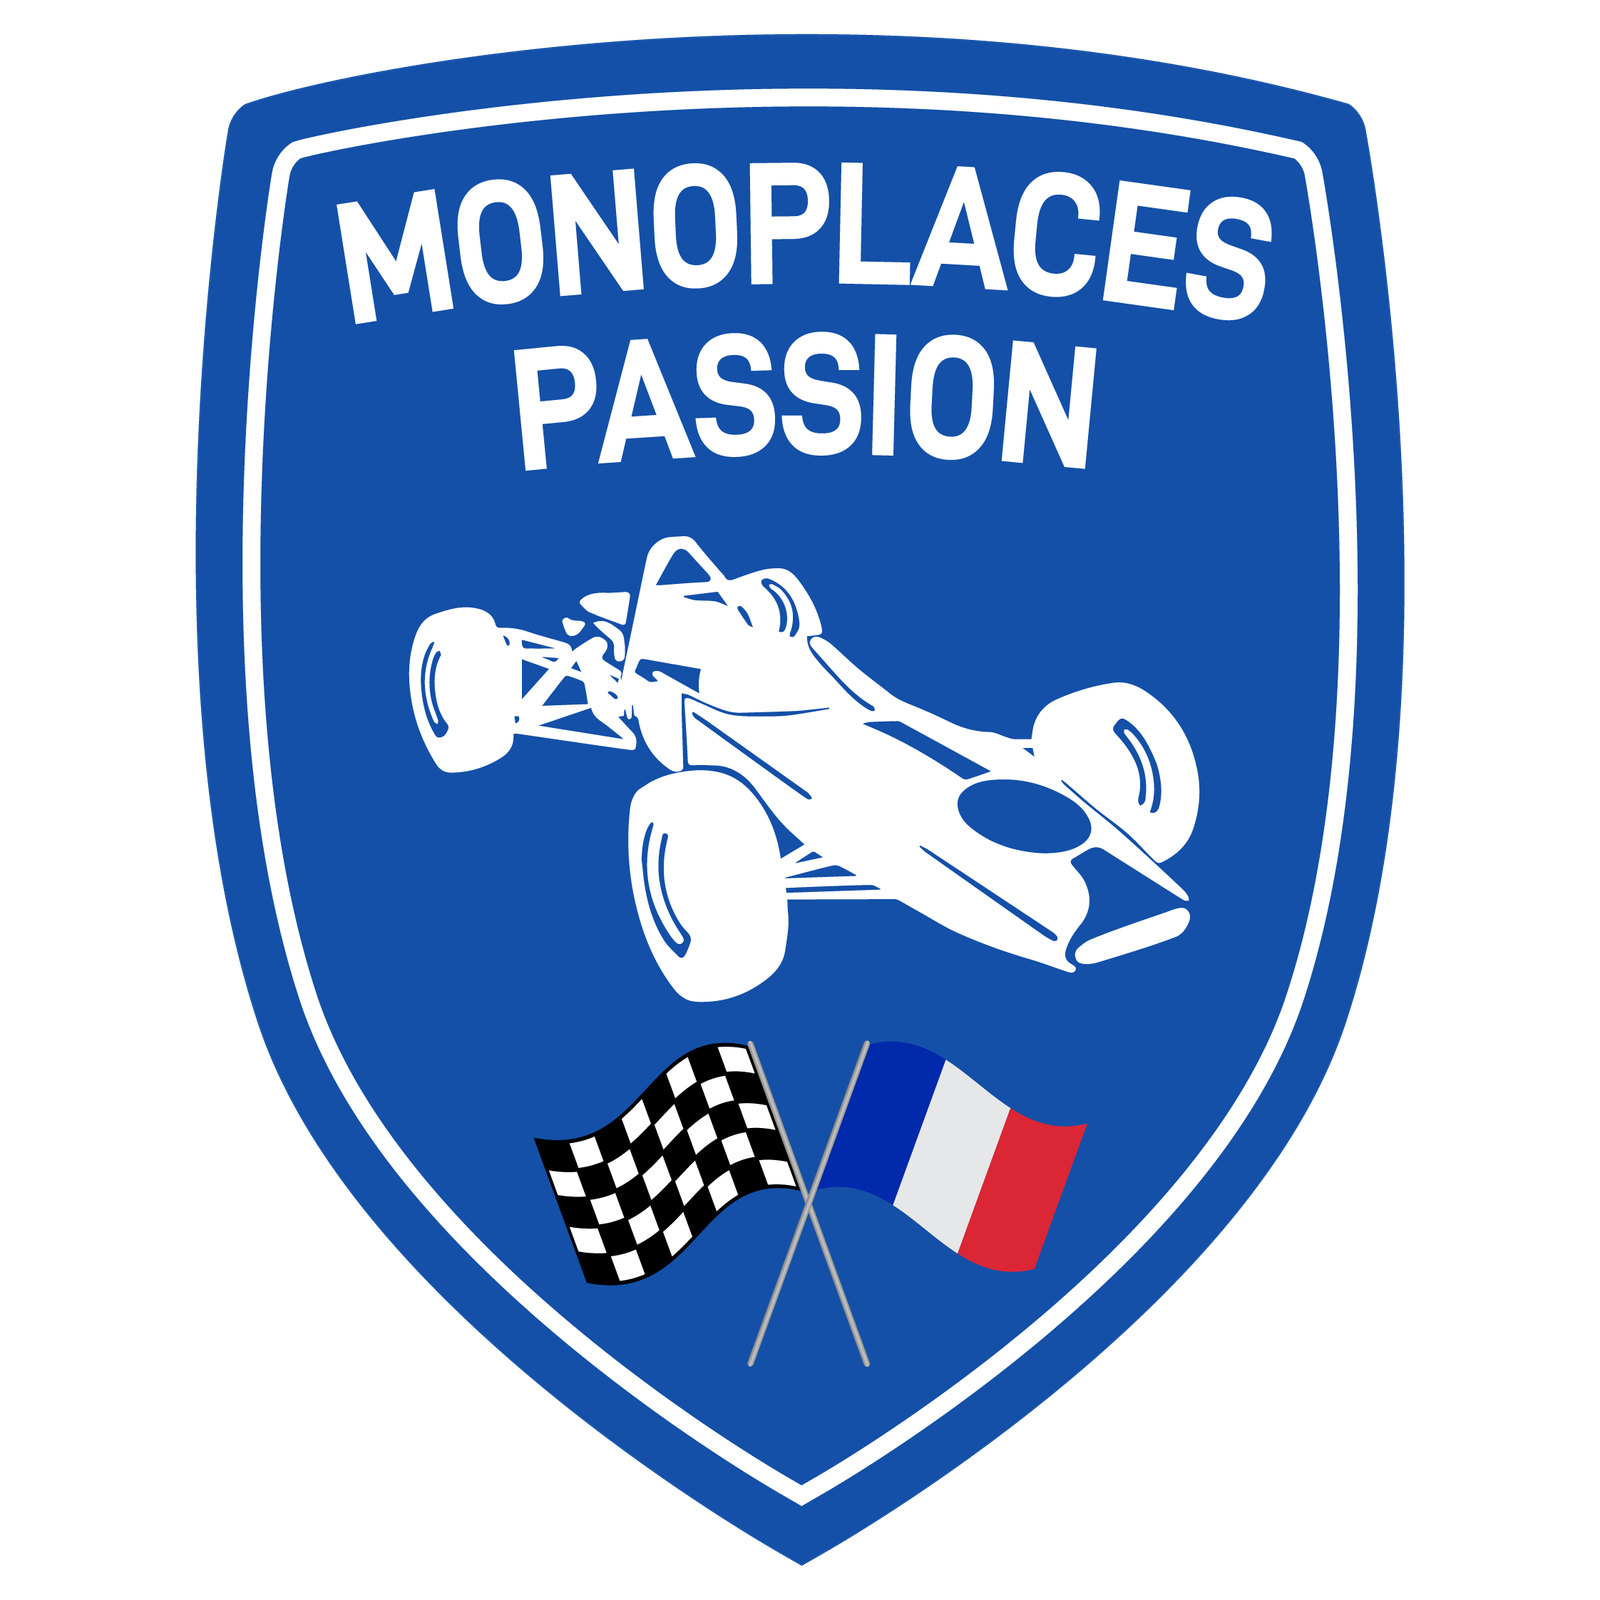 Monoplace passion